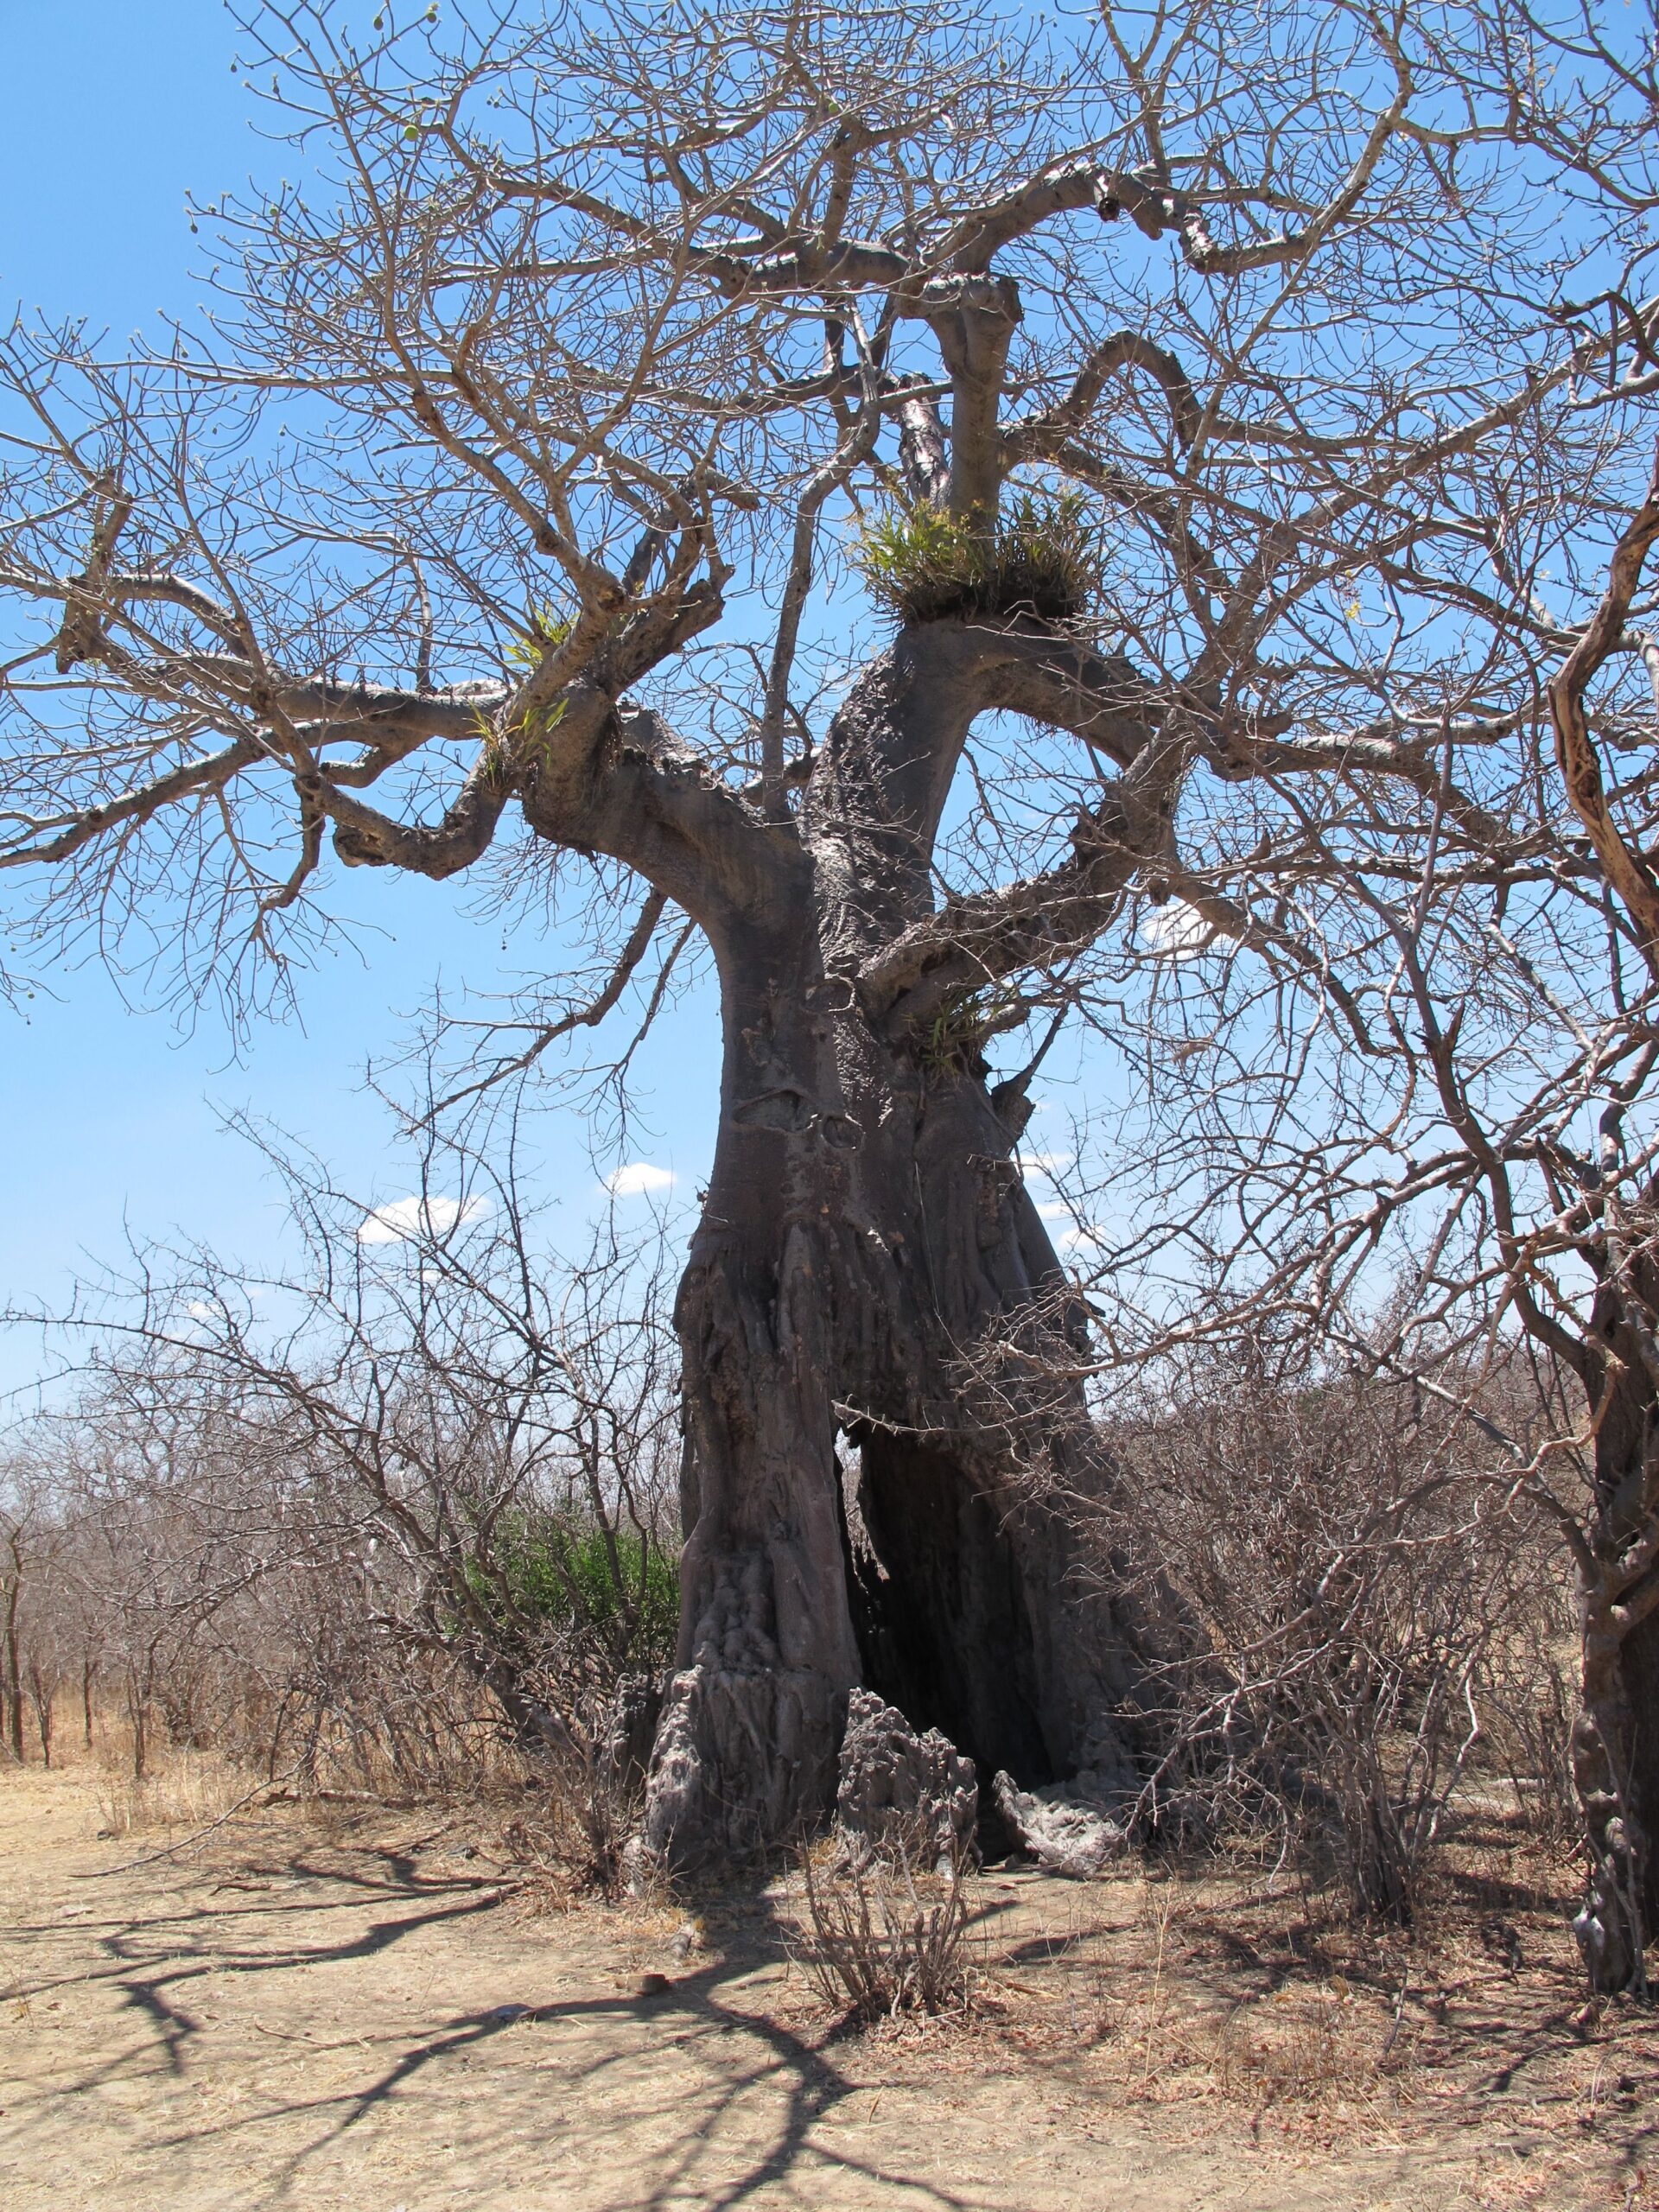 Old Baobab tree - the tree of life at Jomgomero in Ruaha